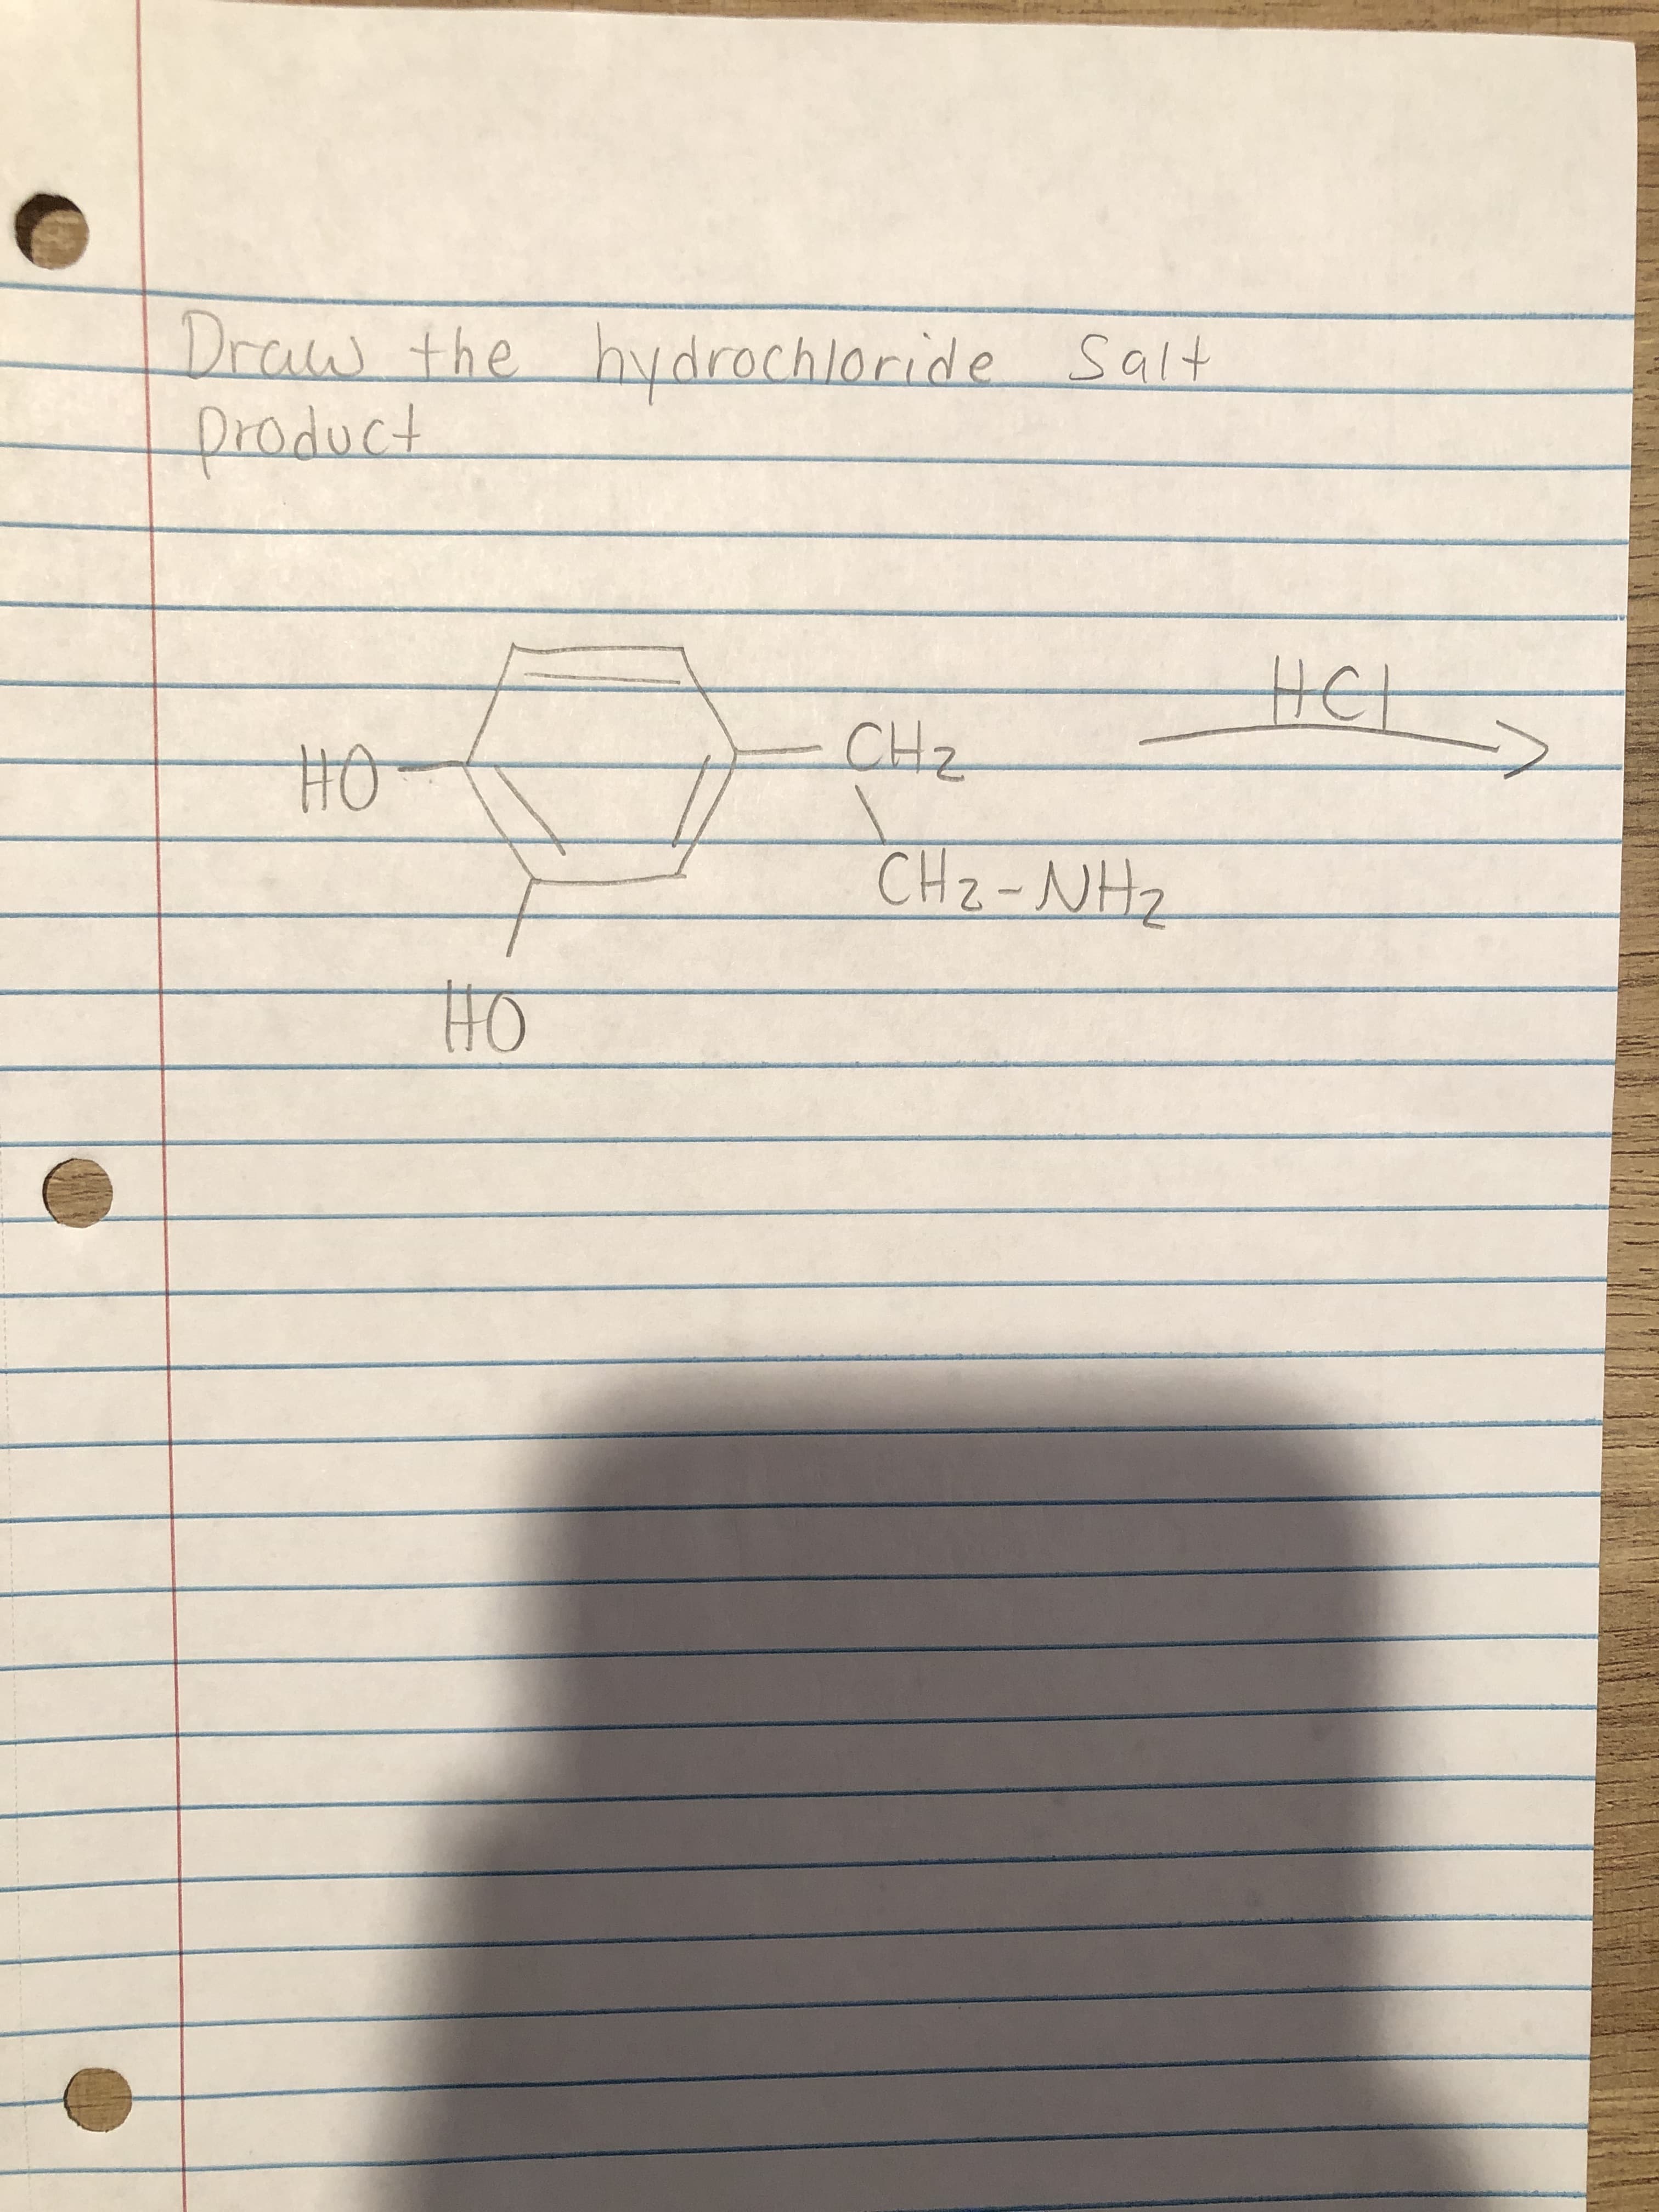 the hydrochloride Salt
CHz
CH2-NHz
HO
